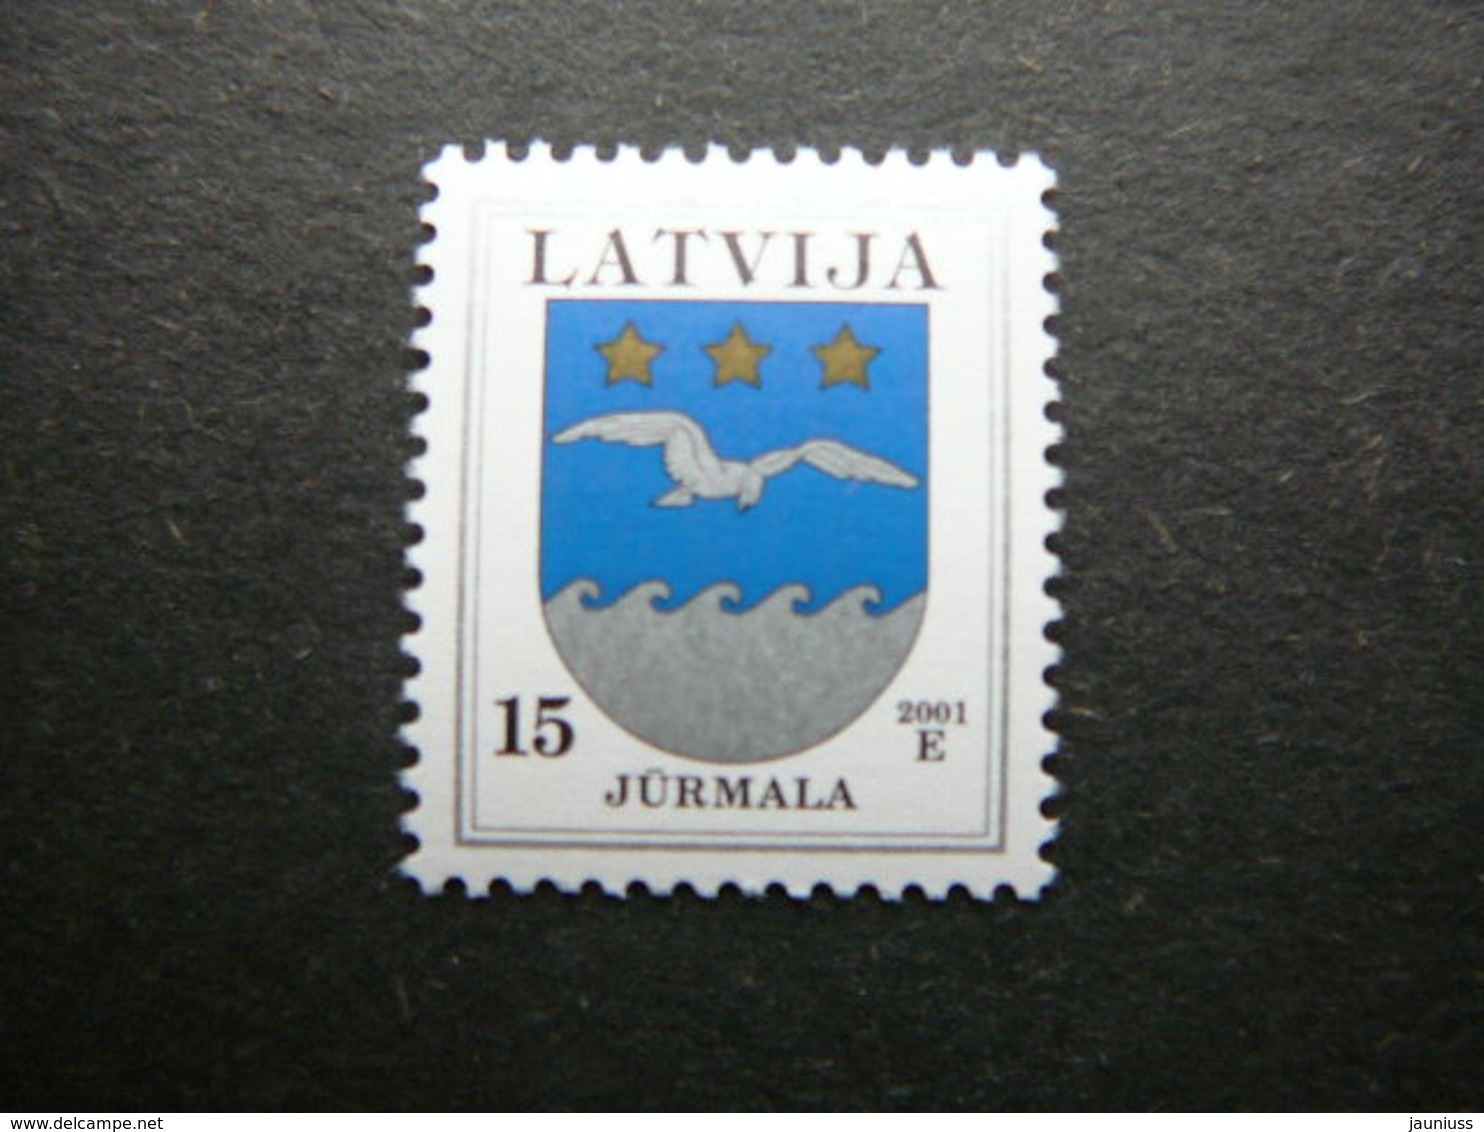 Definitive Issue Arms # Latvia Lettland Lettonie # 2001 MNH # Mi. 522 II - Lettonie